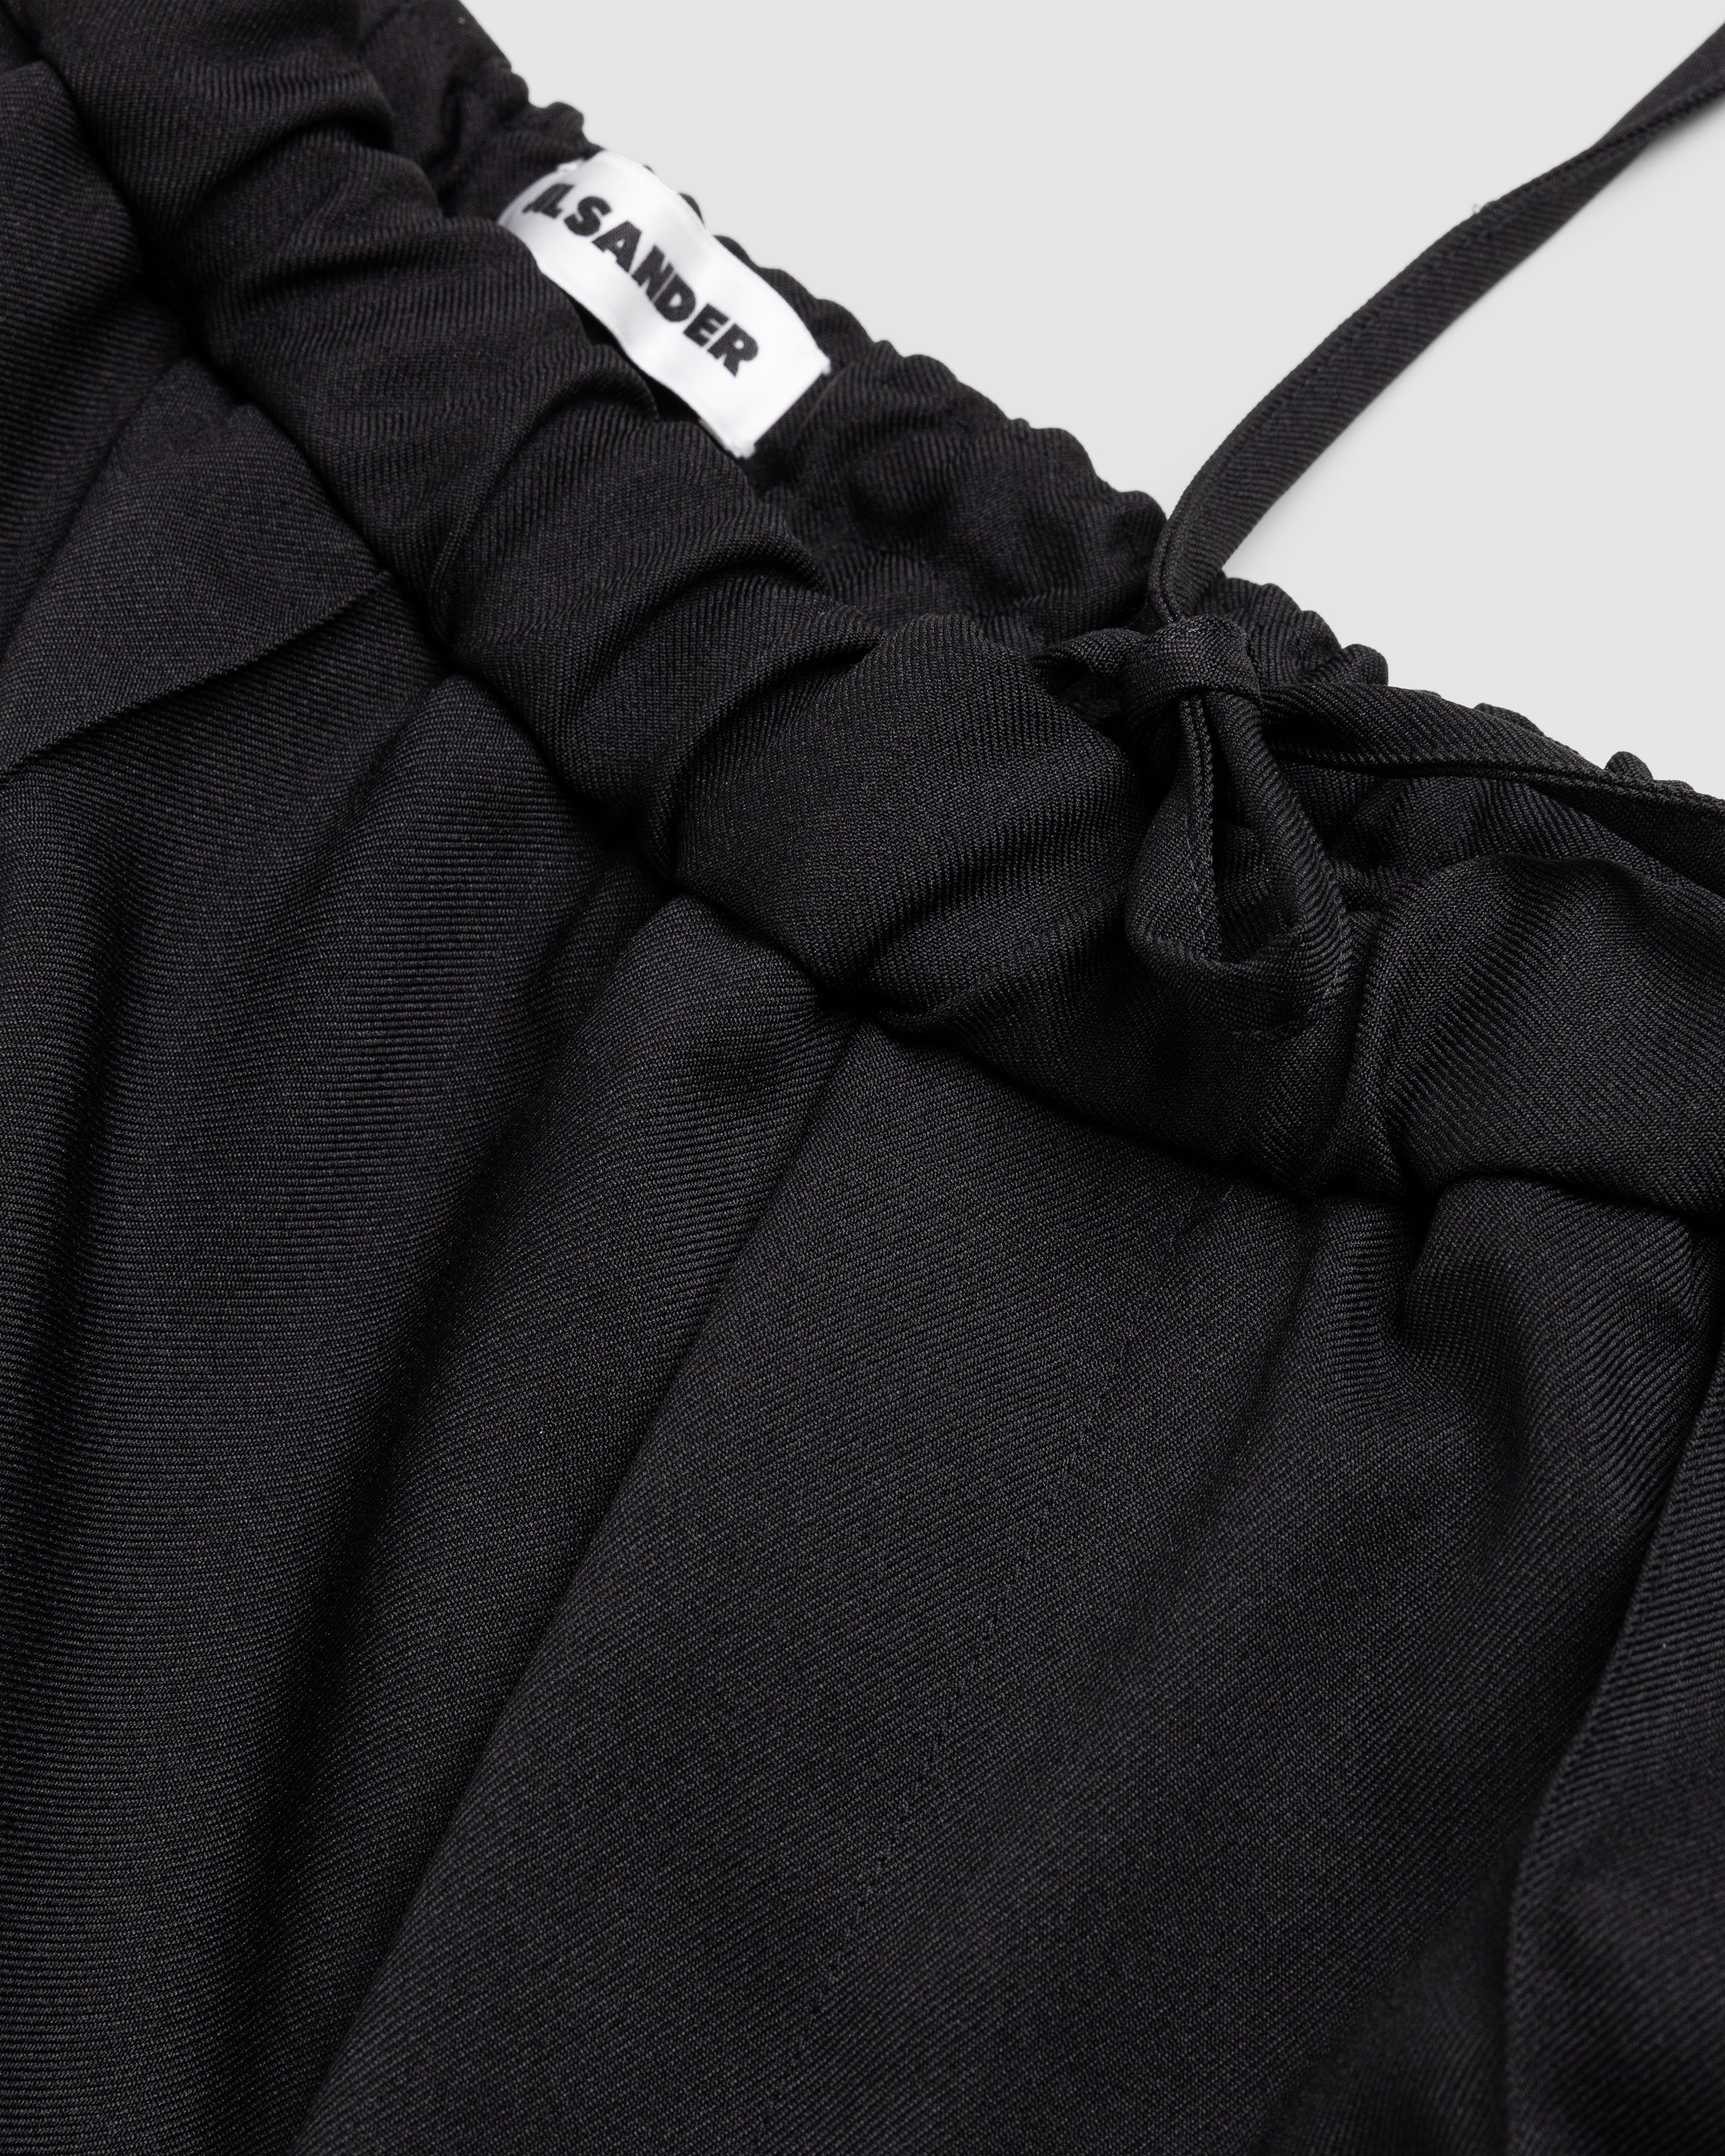 Jil Sander - Trouser D 09 AW 20 - Clothing - Black - Image 3